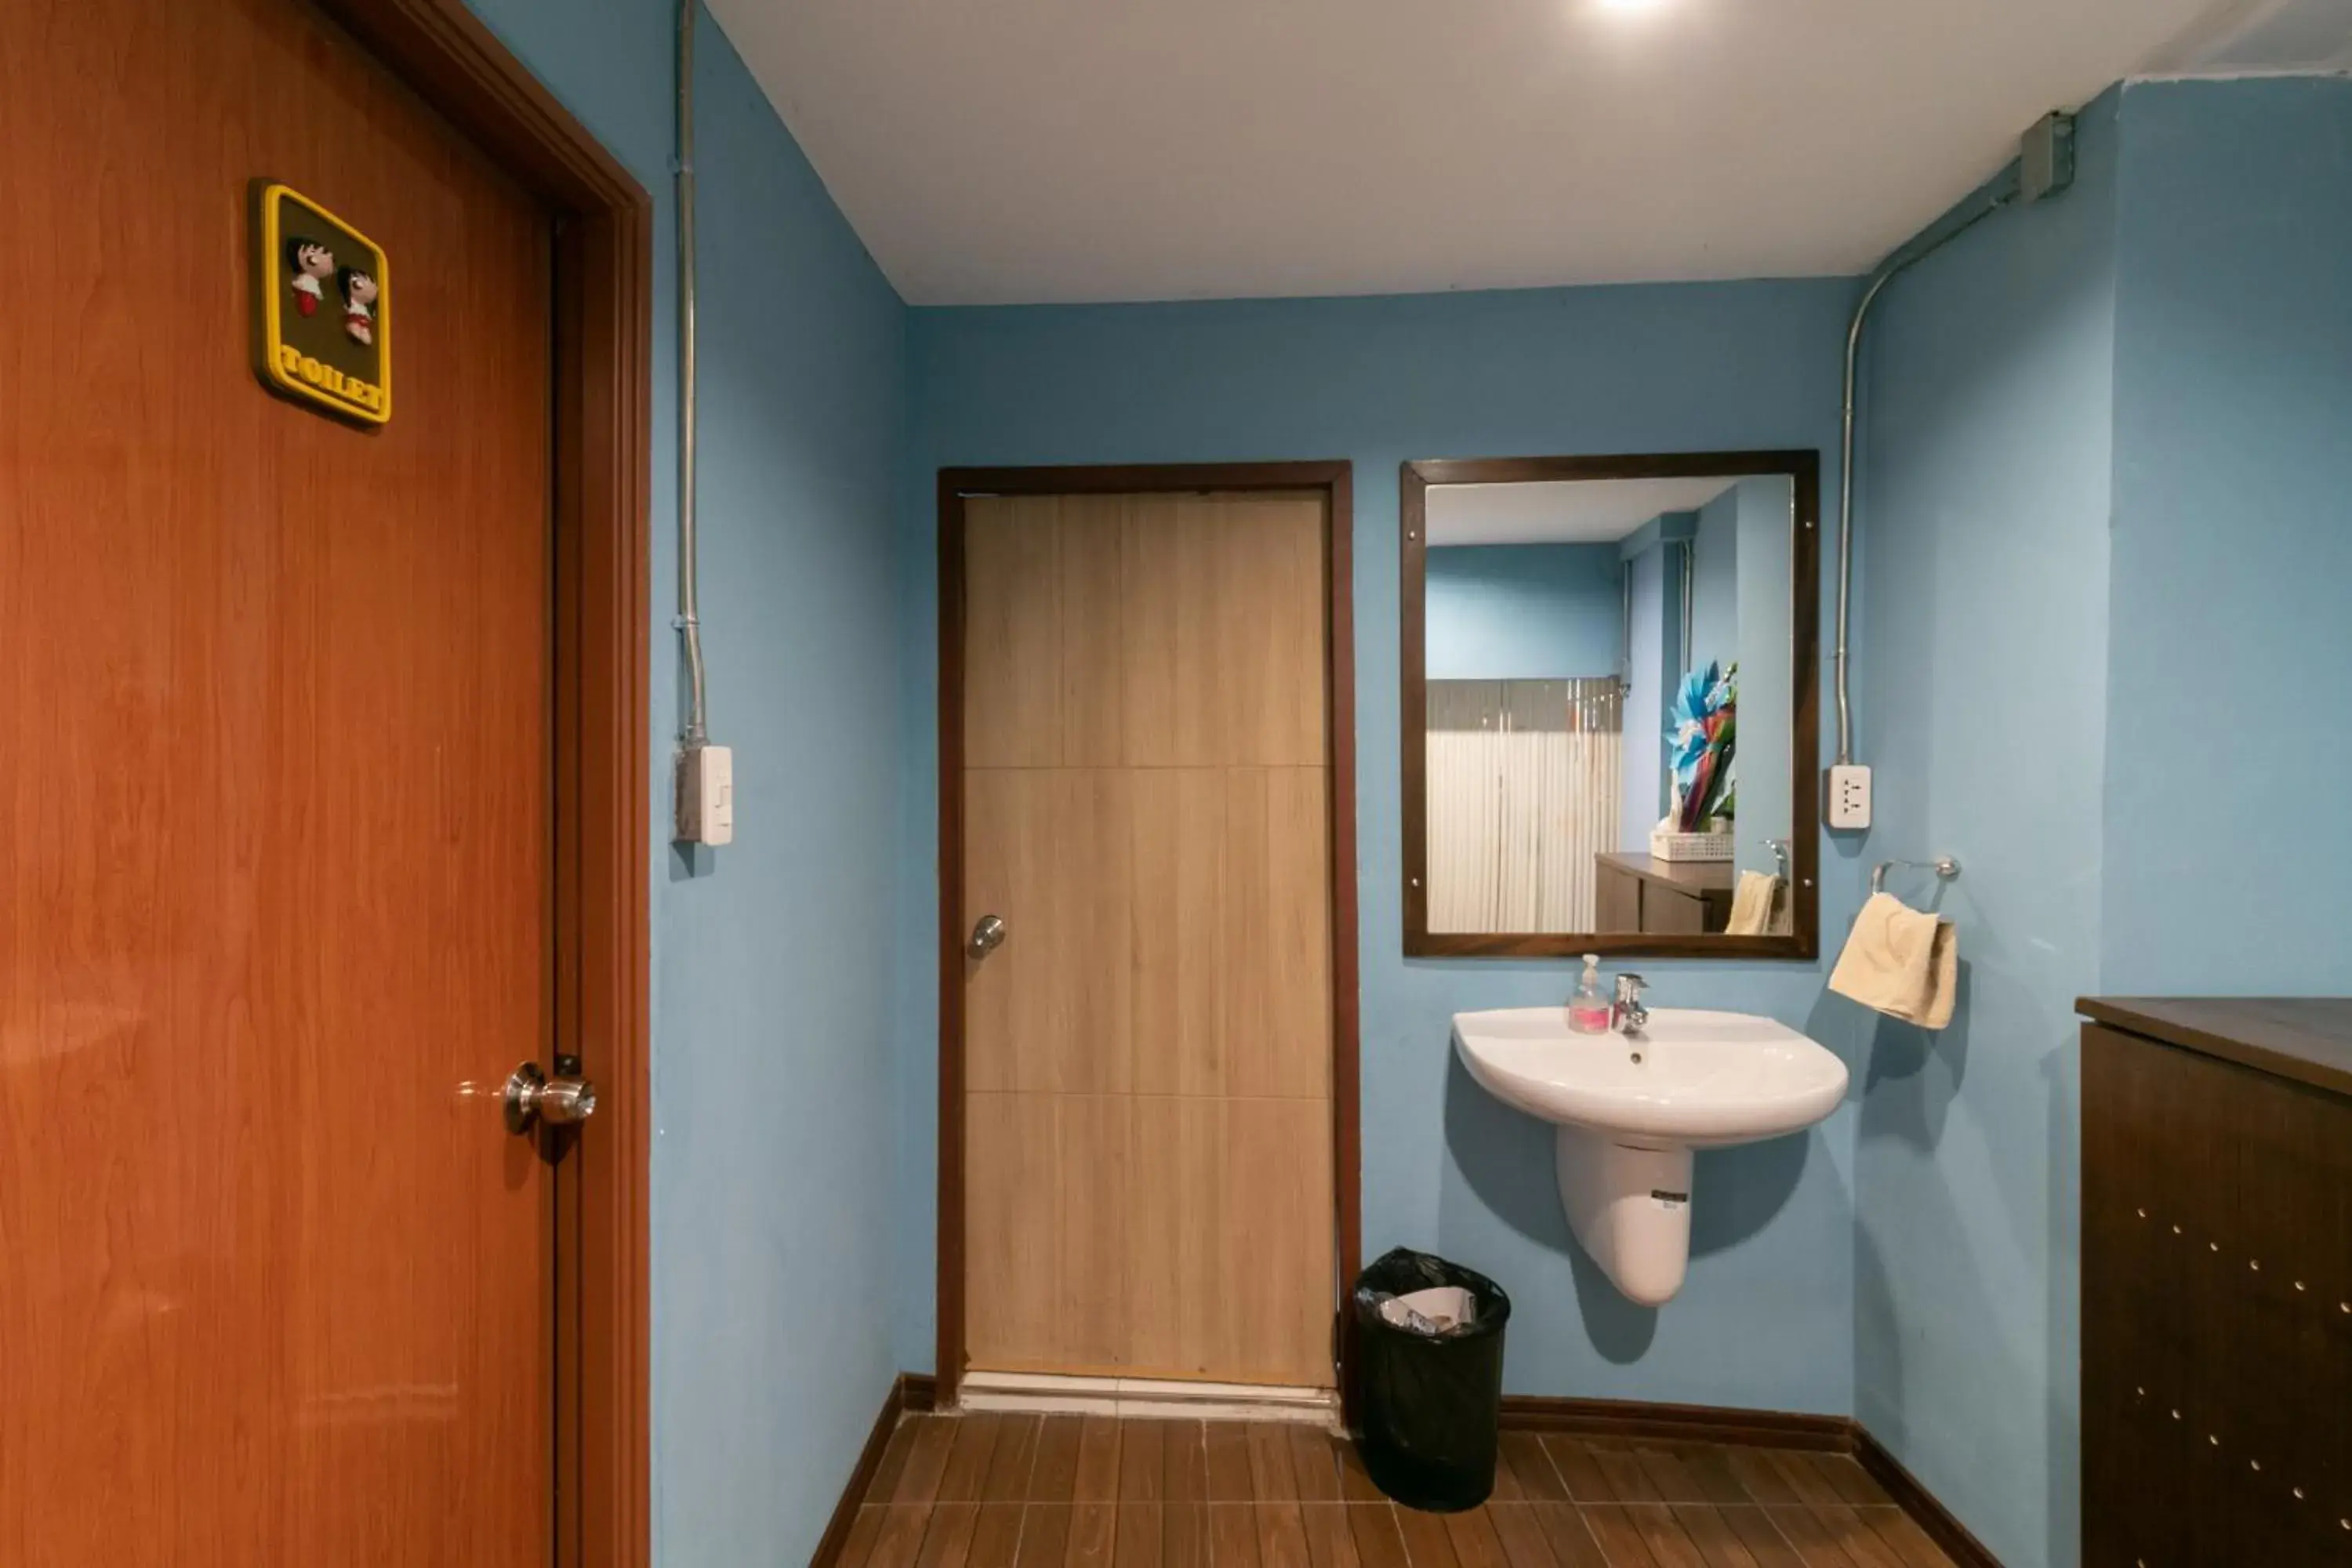 Area and facilities, Bathroom in Phob phan Hostel